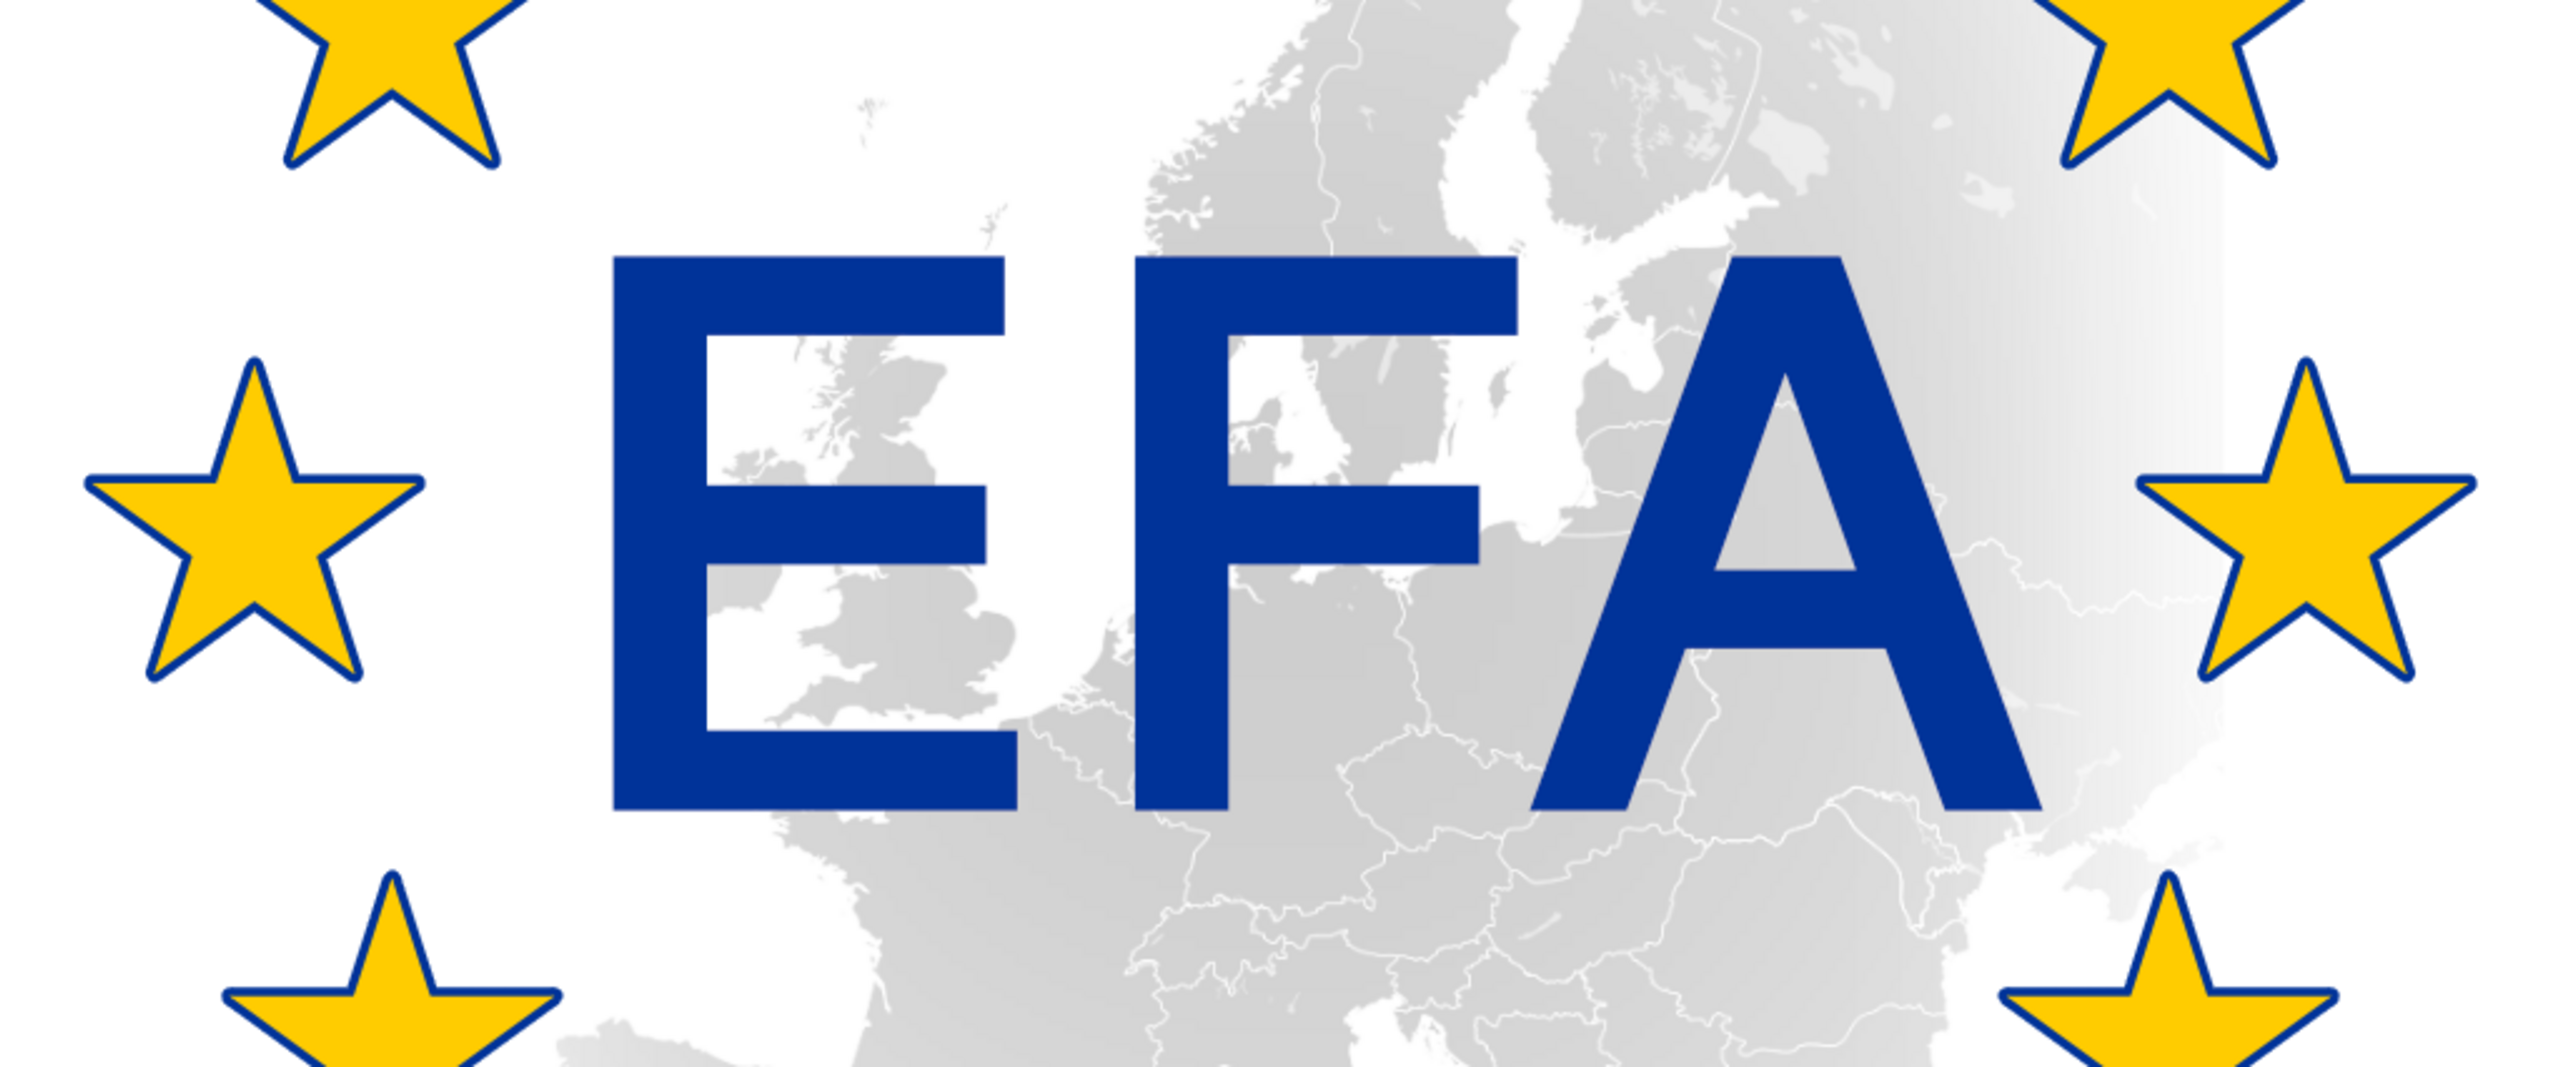 Logo des Unternehmens "EFA".